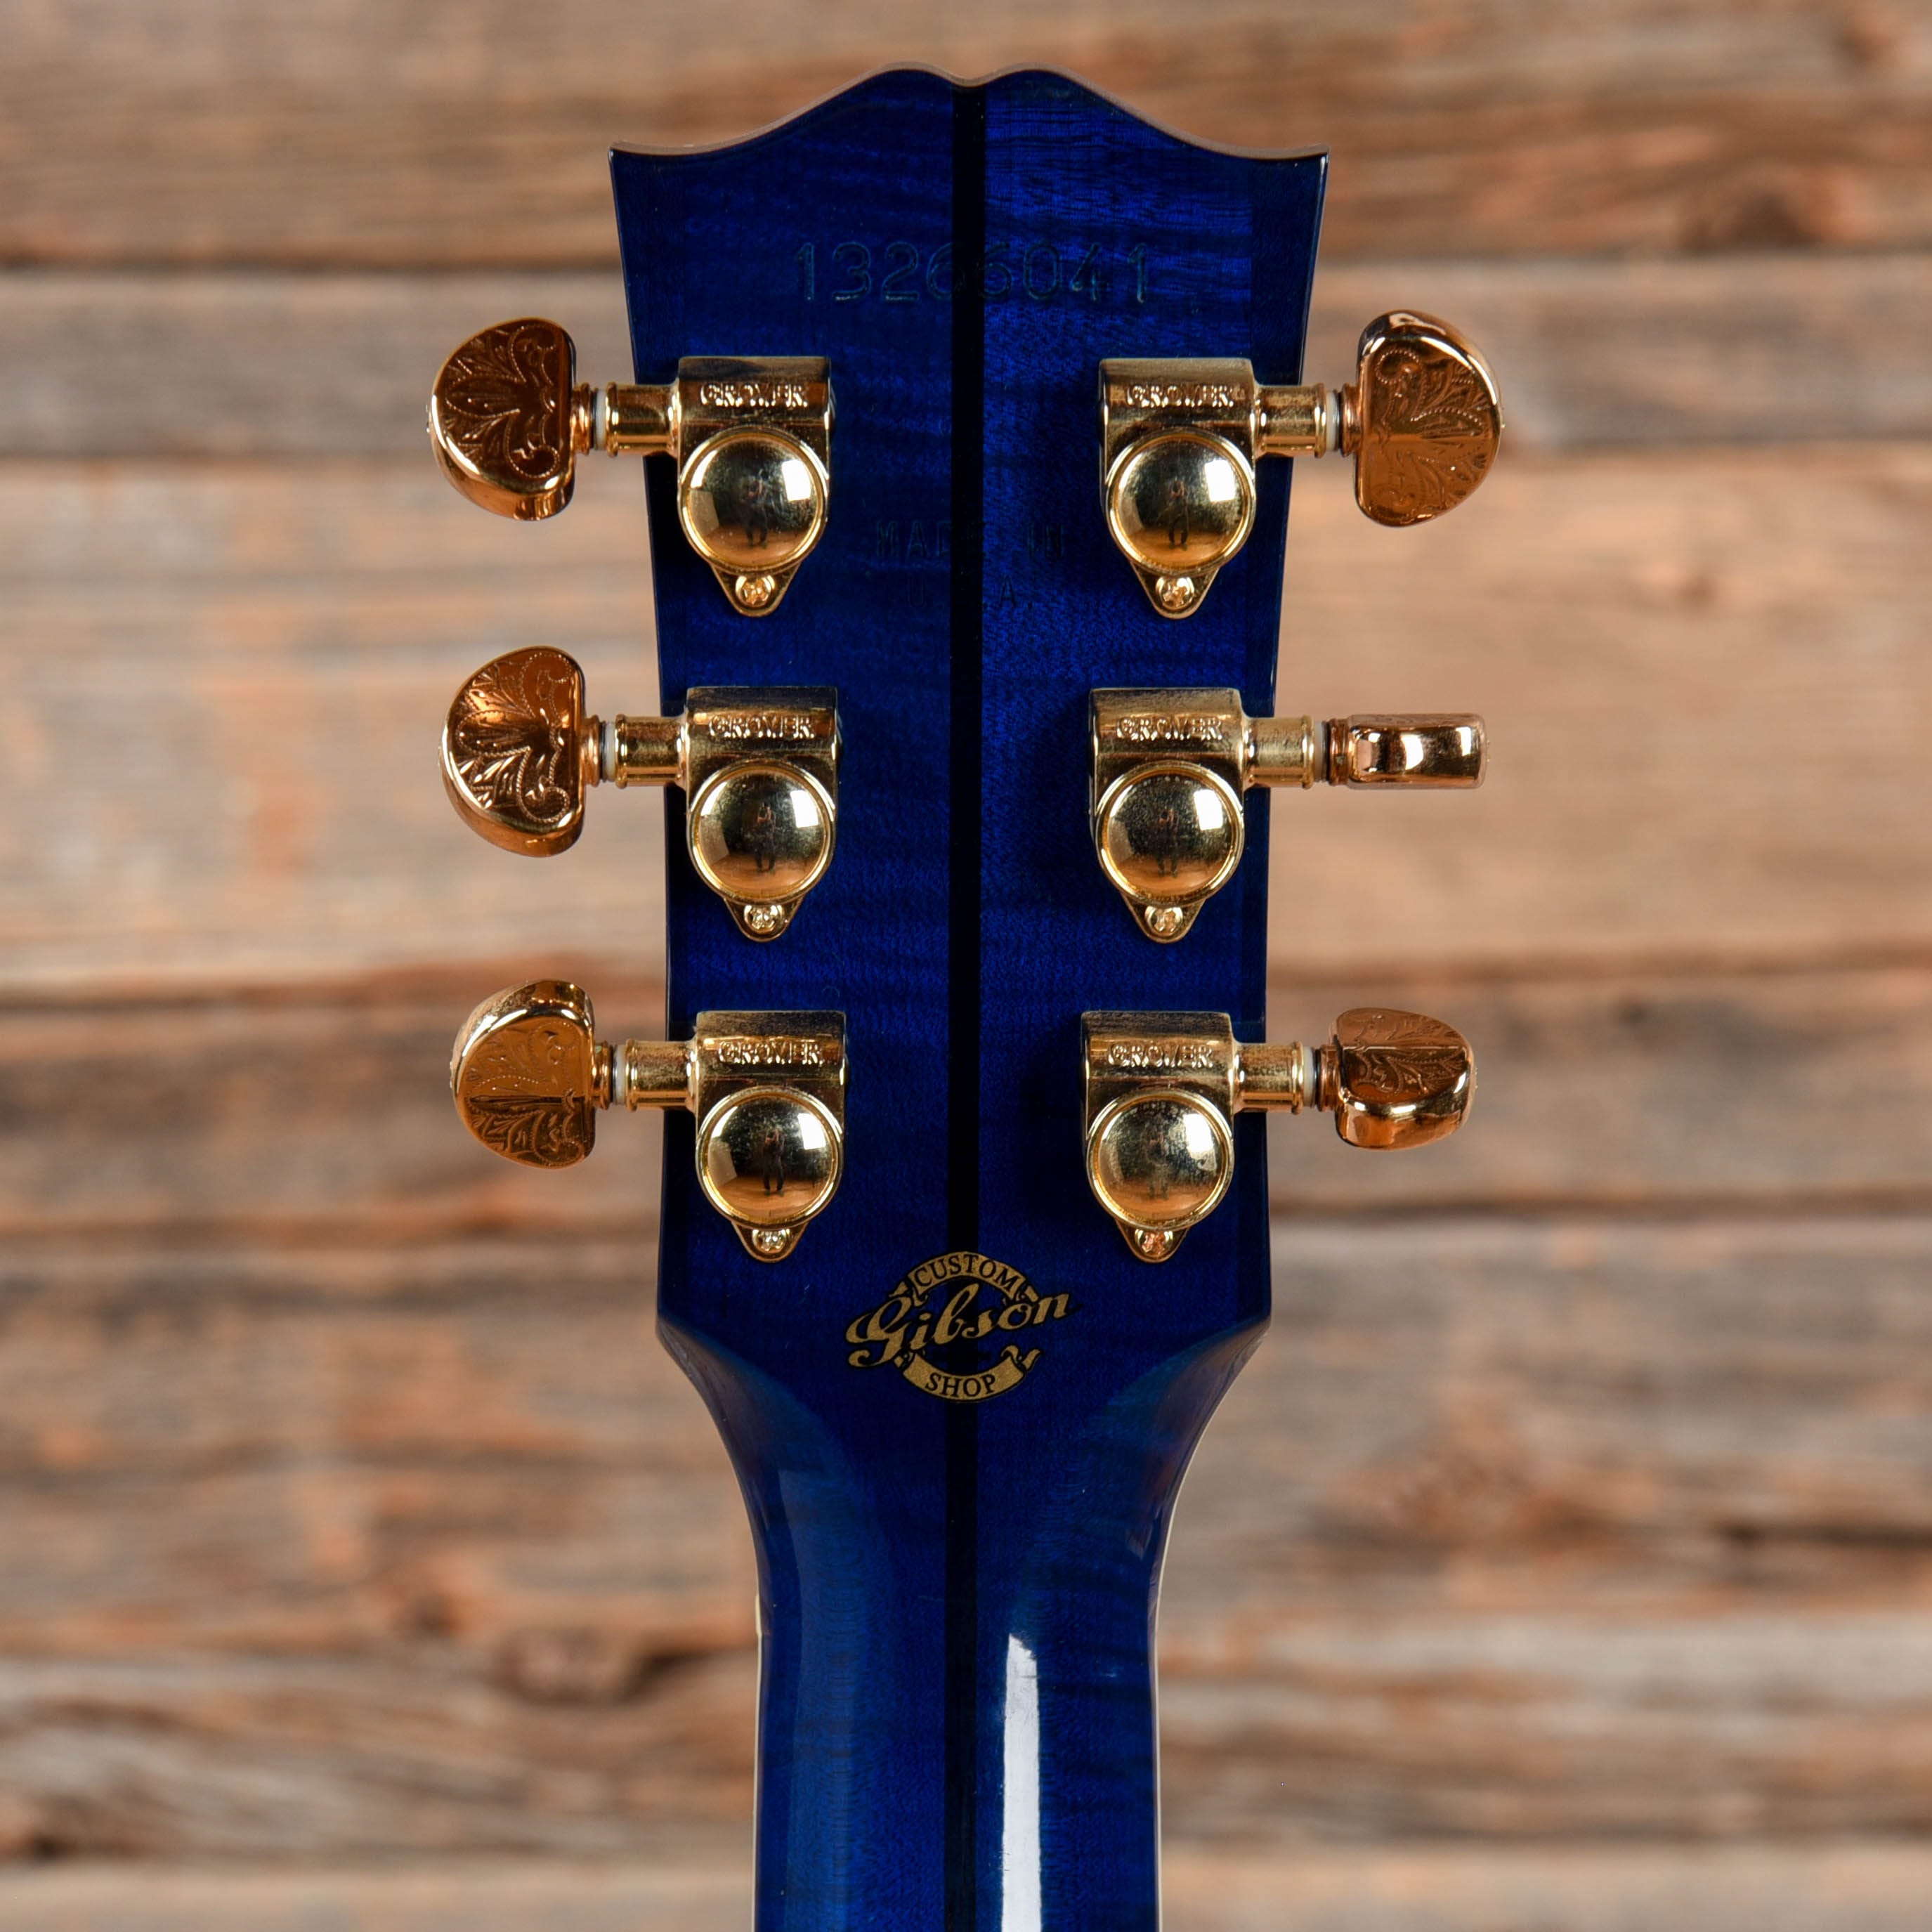 Gibson Hummingbird Custom Quilt (Custom Inlays and Blue Finish) Blue 2015